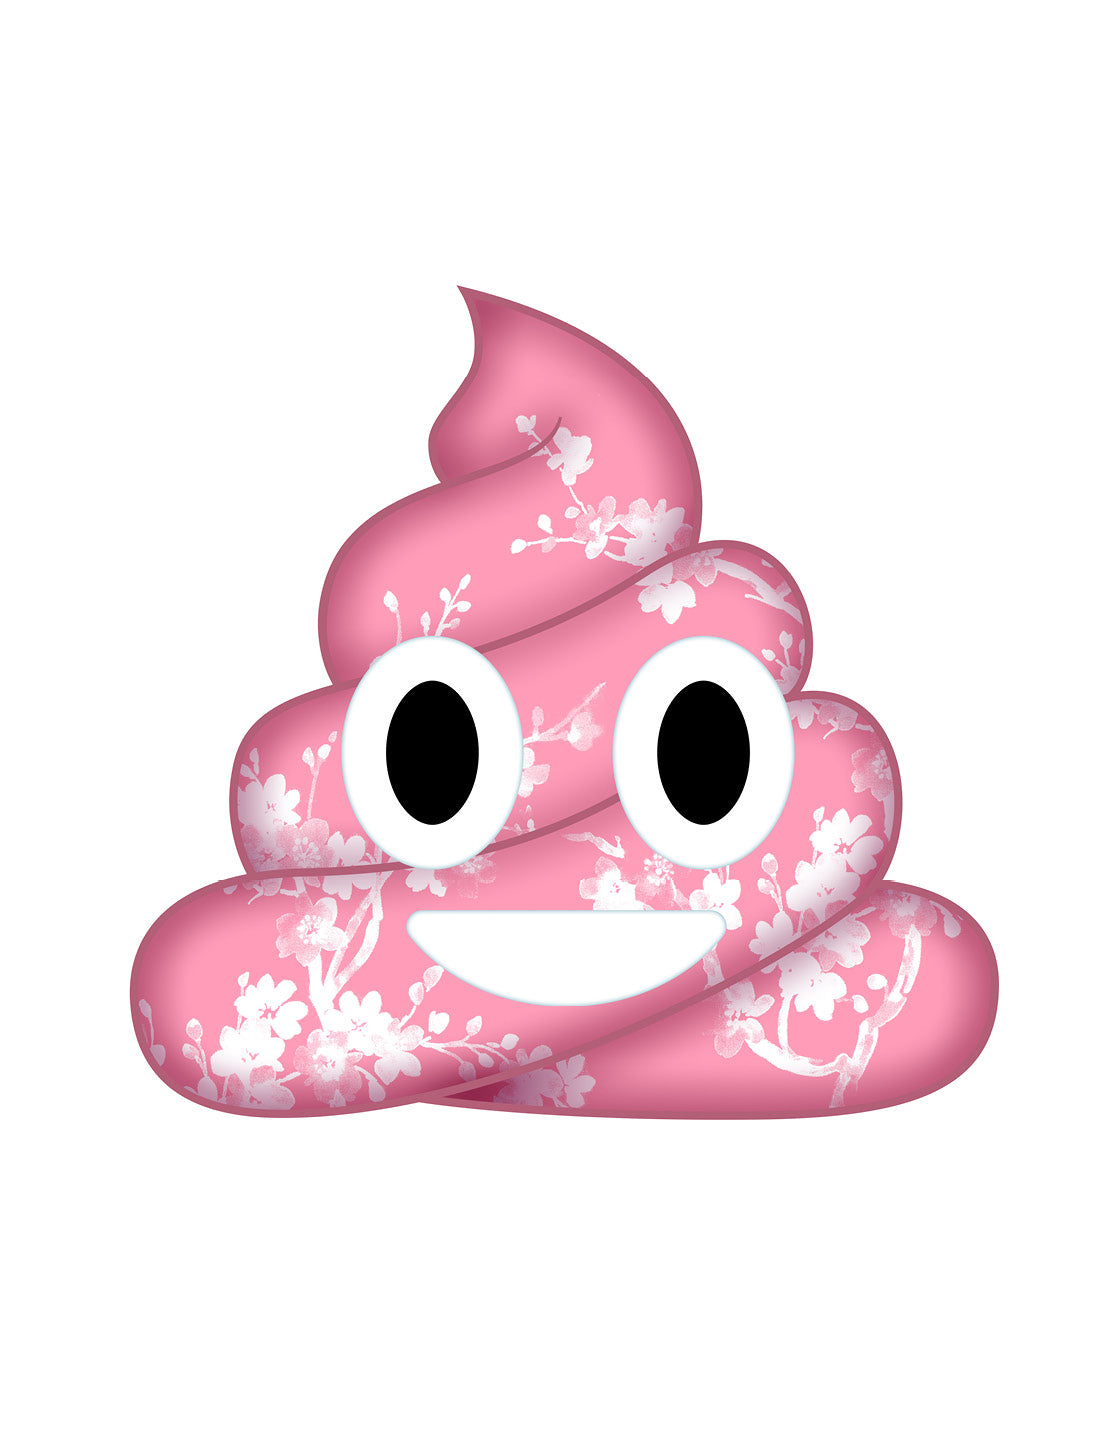 Pink poo emoji